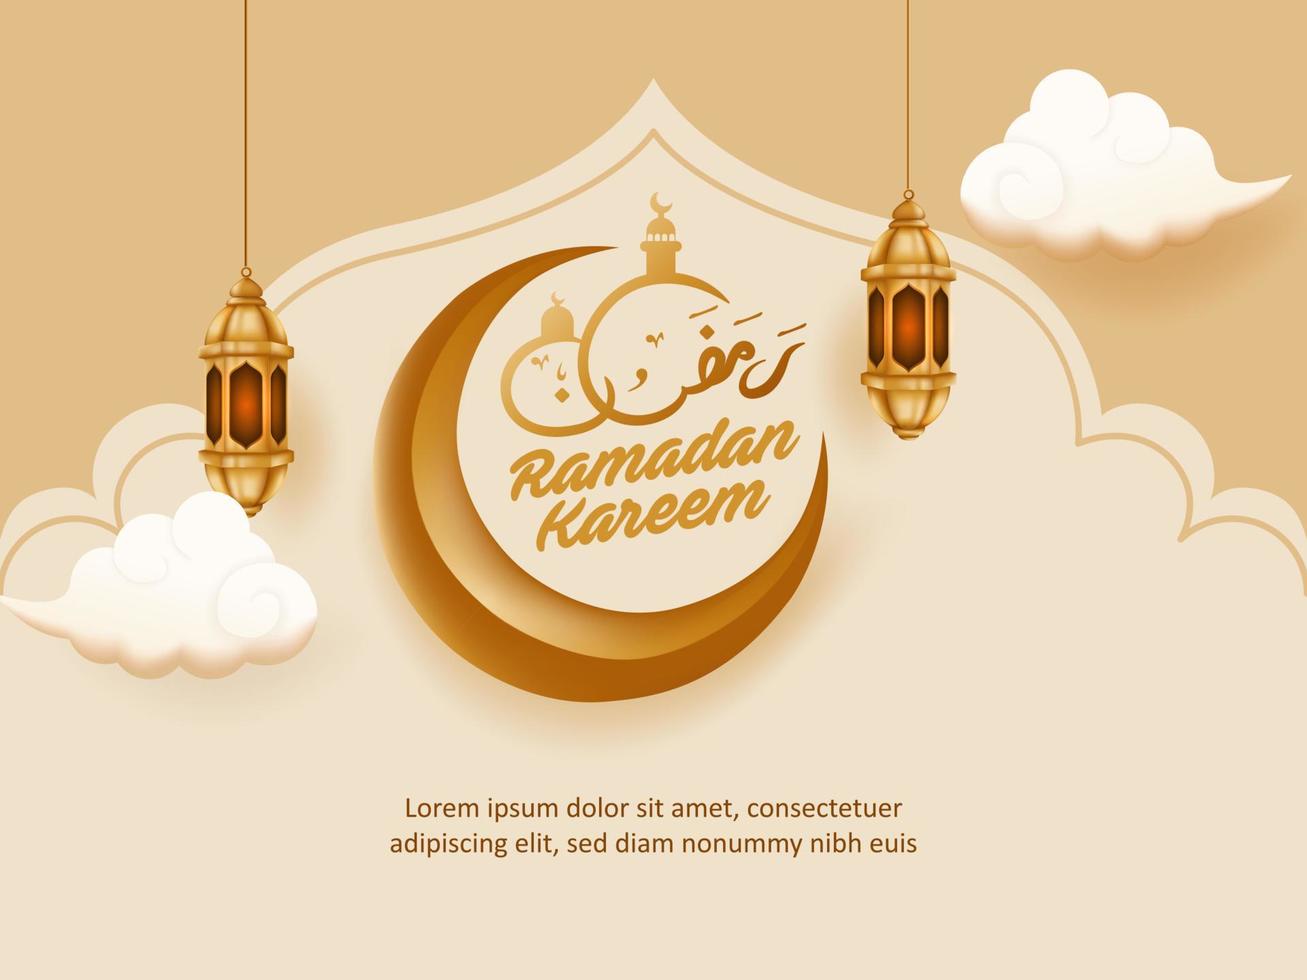 beau ramadan kareem salutations fond d'illustration vectorielle vecteur